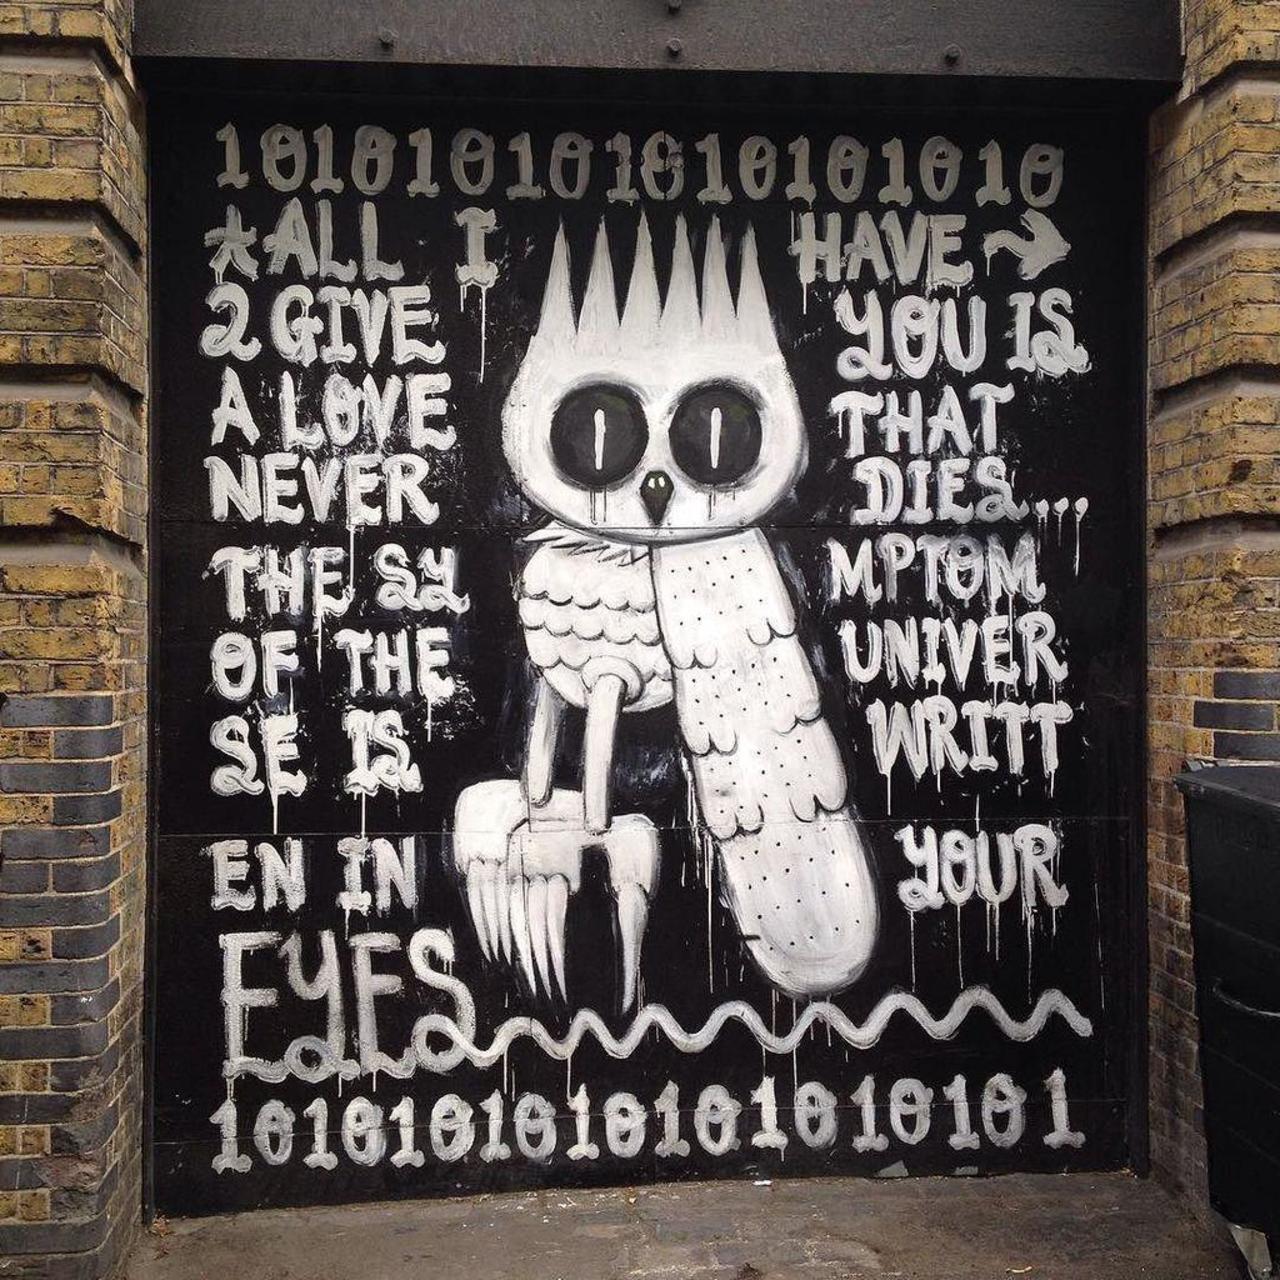 Beauty. #streetart #streetartlondon #graffiti #london #thisislondon by isadarko http://t.co/eSIf4YTkKb